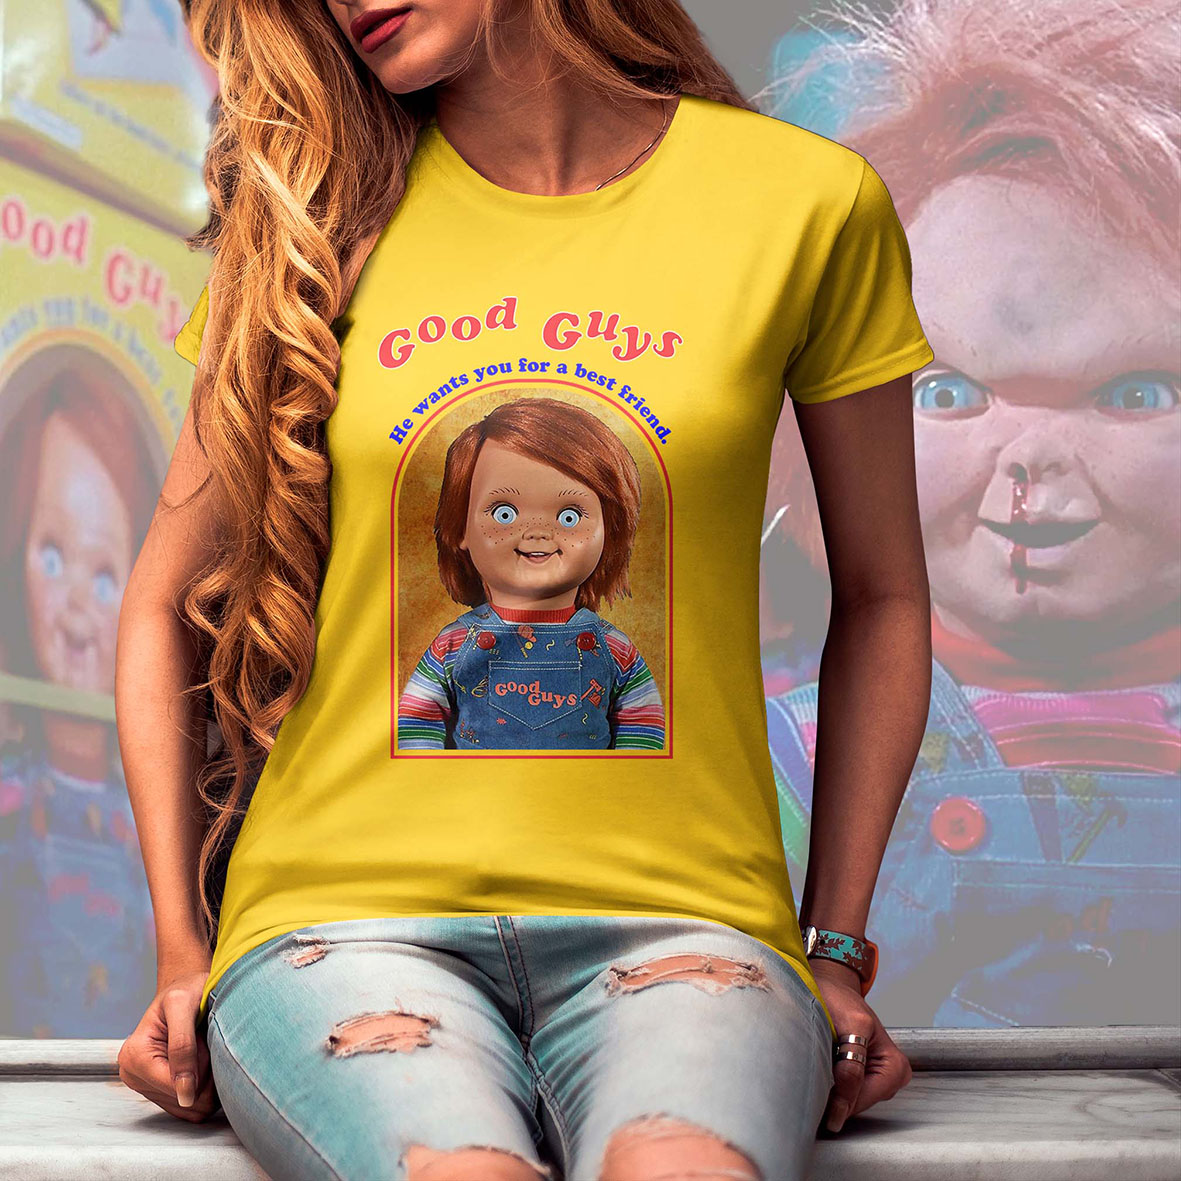 Camiseta Unissex Feminina Good Guys Chucky Brinquedo Assassino Boneco Child's Play (Amarela)  - CD